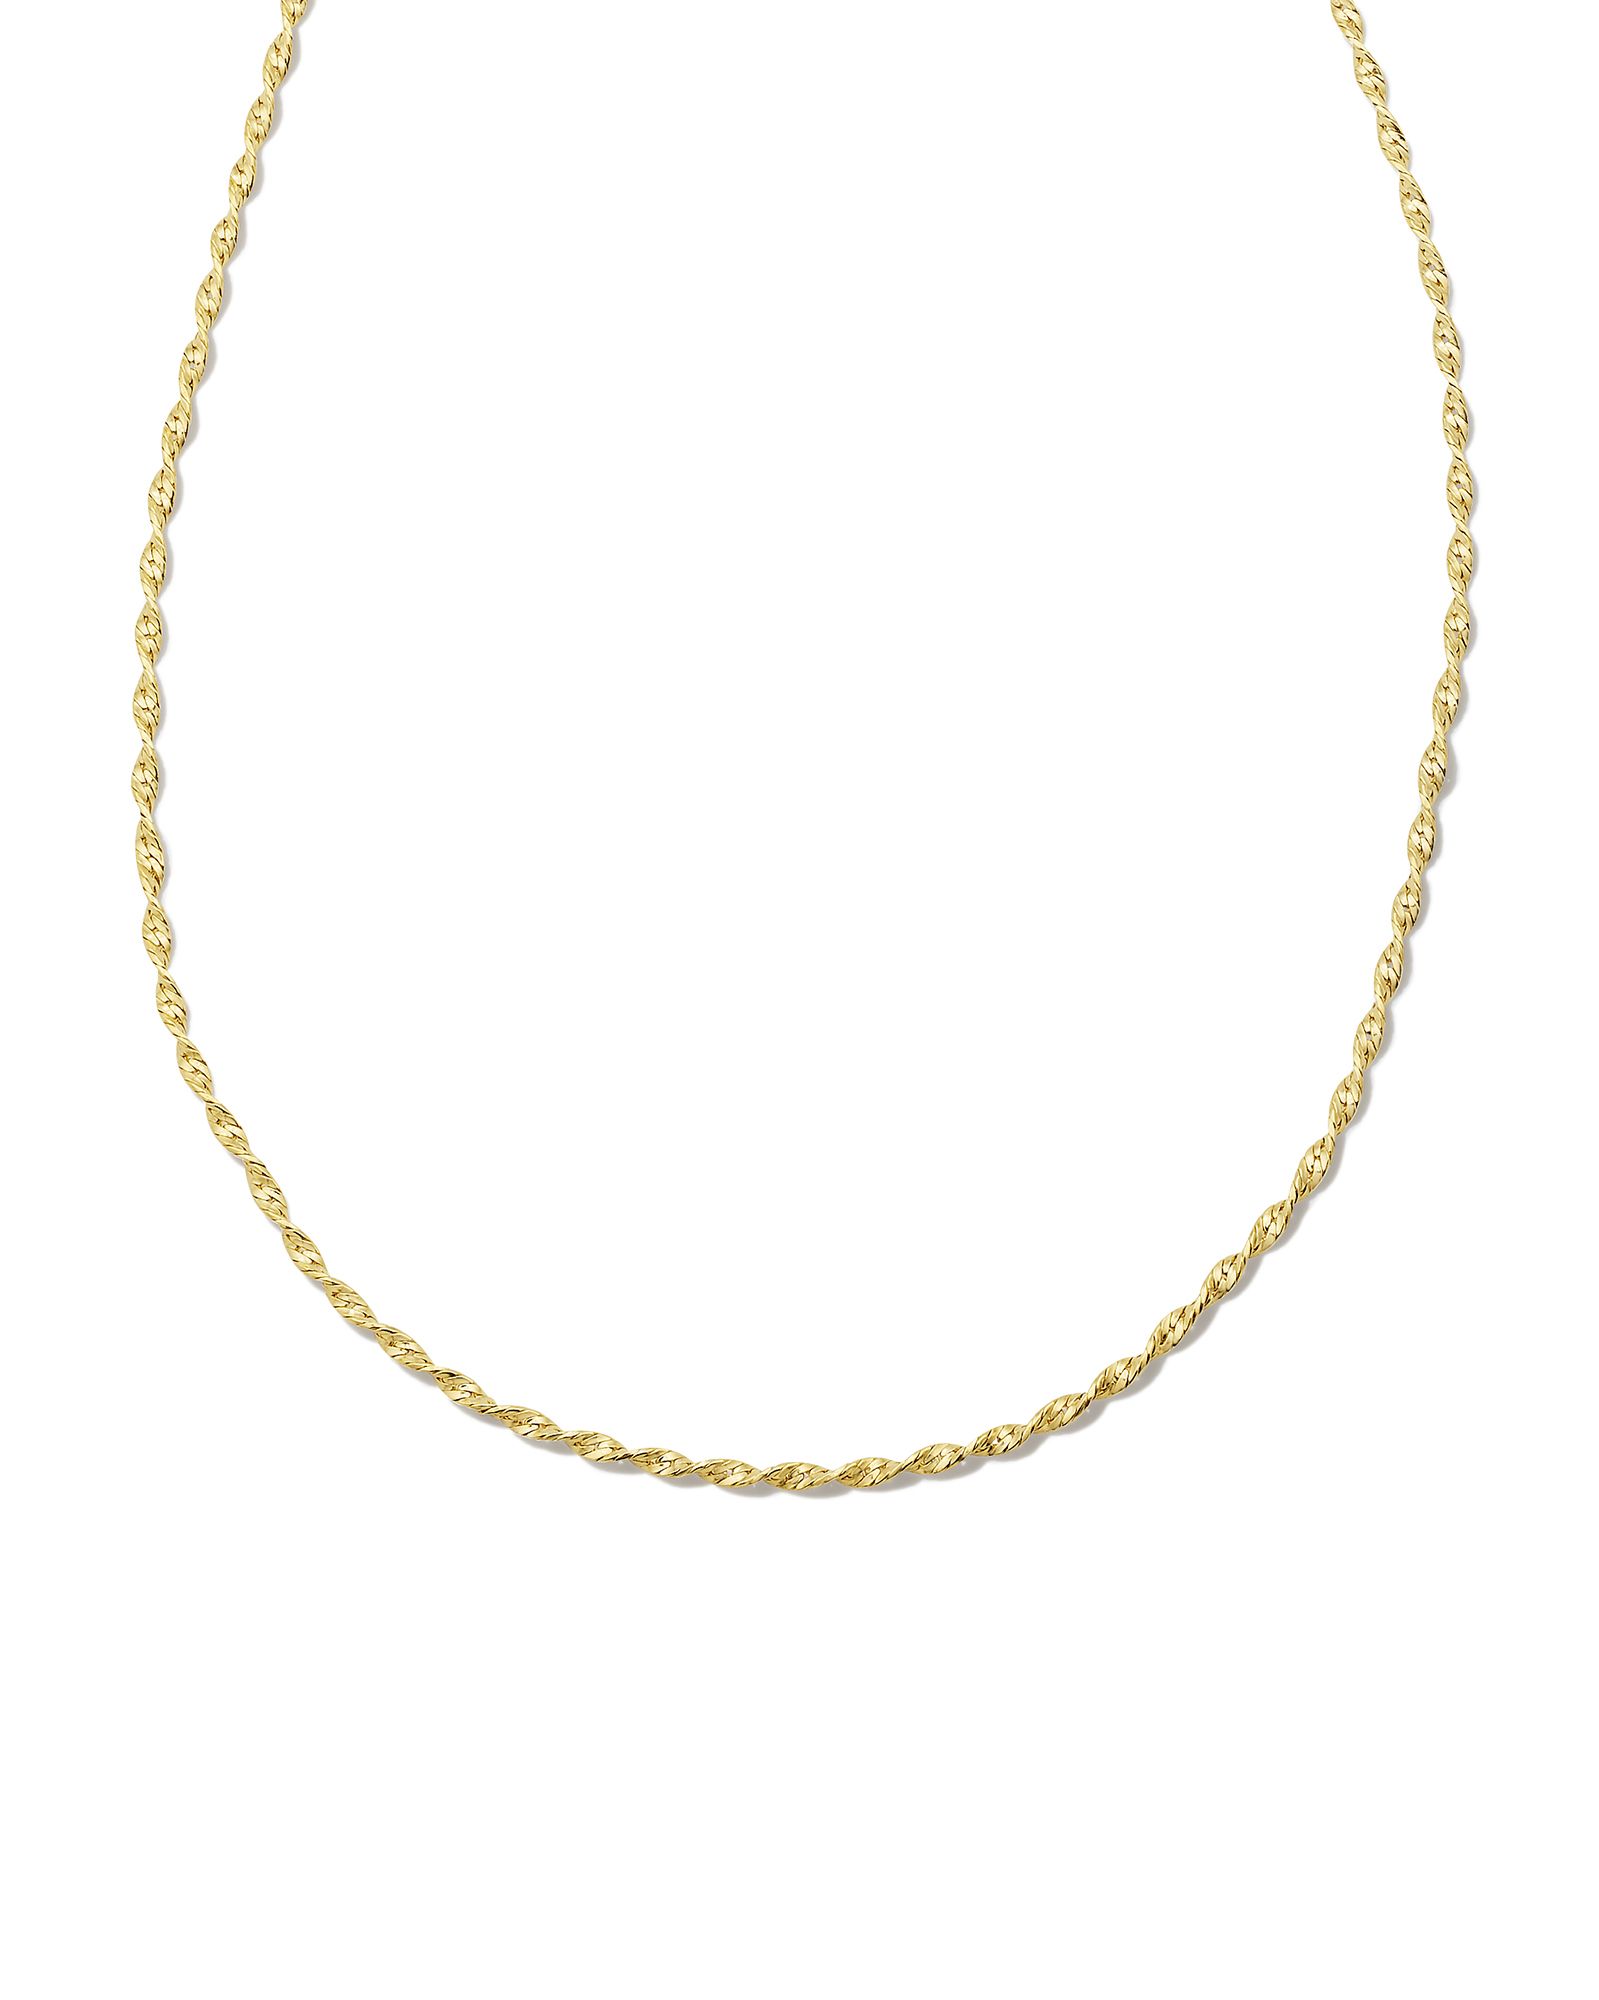 Twisted Victorian Chain Necklace in 18k Gold Vermeil | Kendra Scott | Kendra Scott